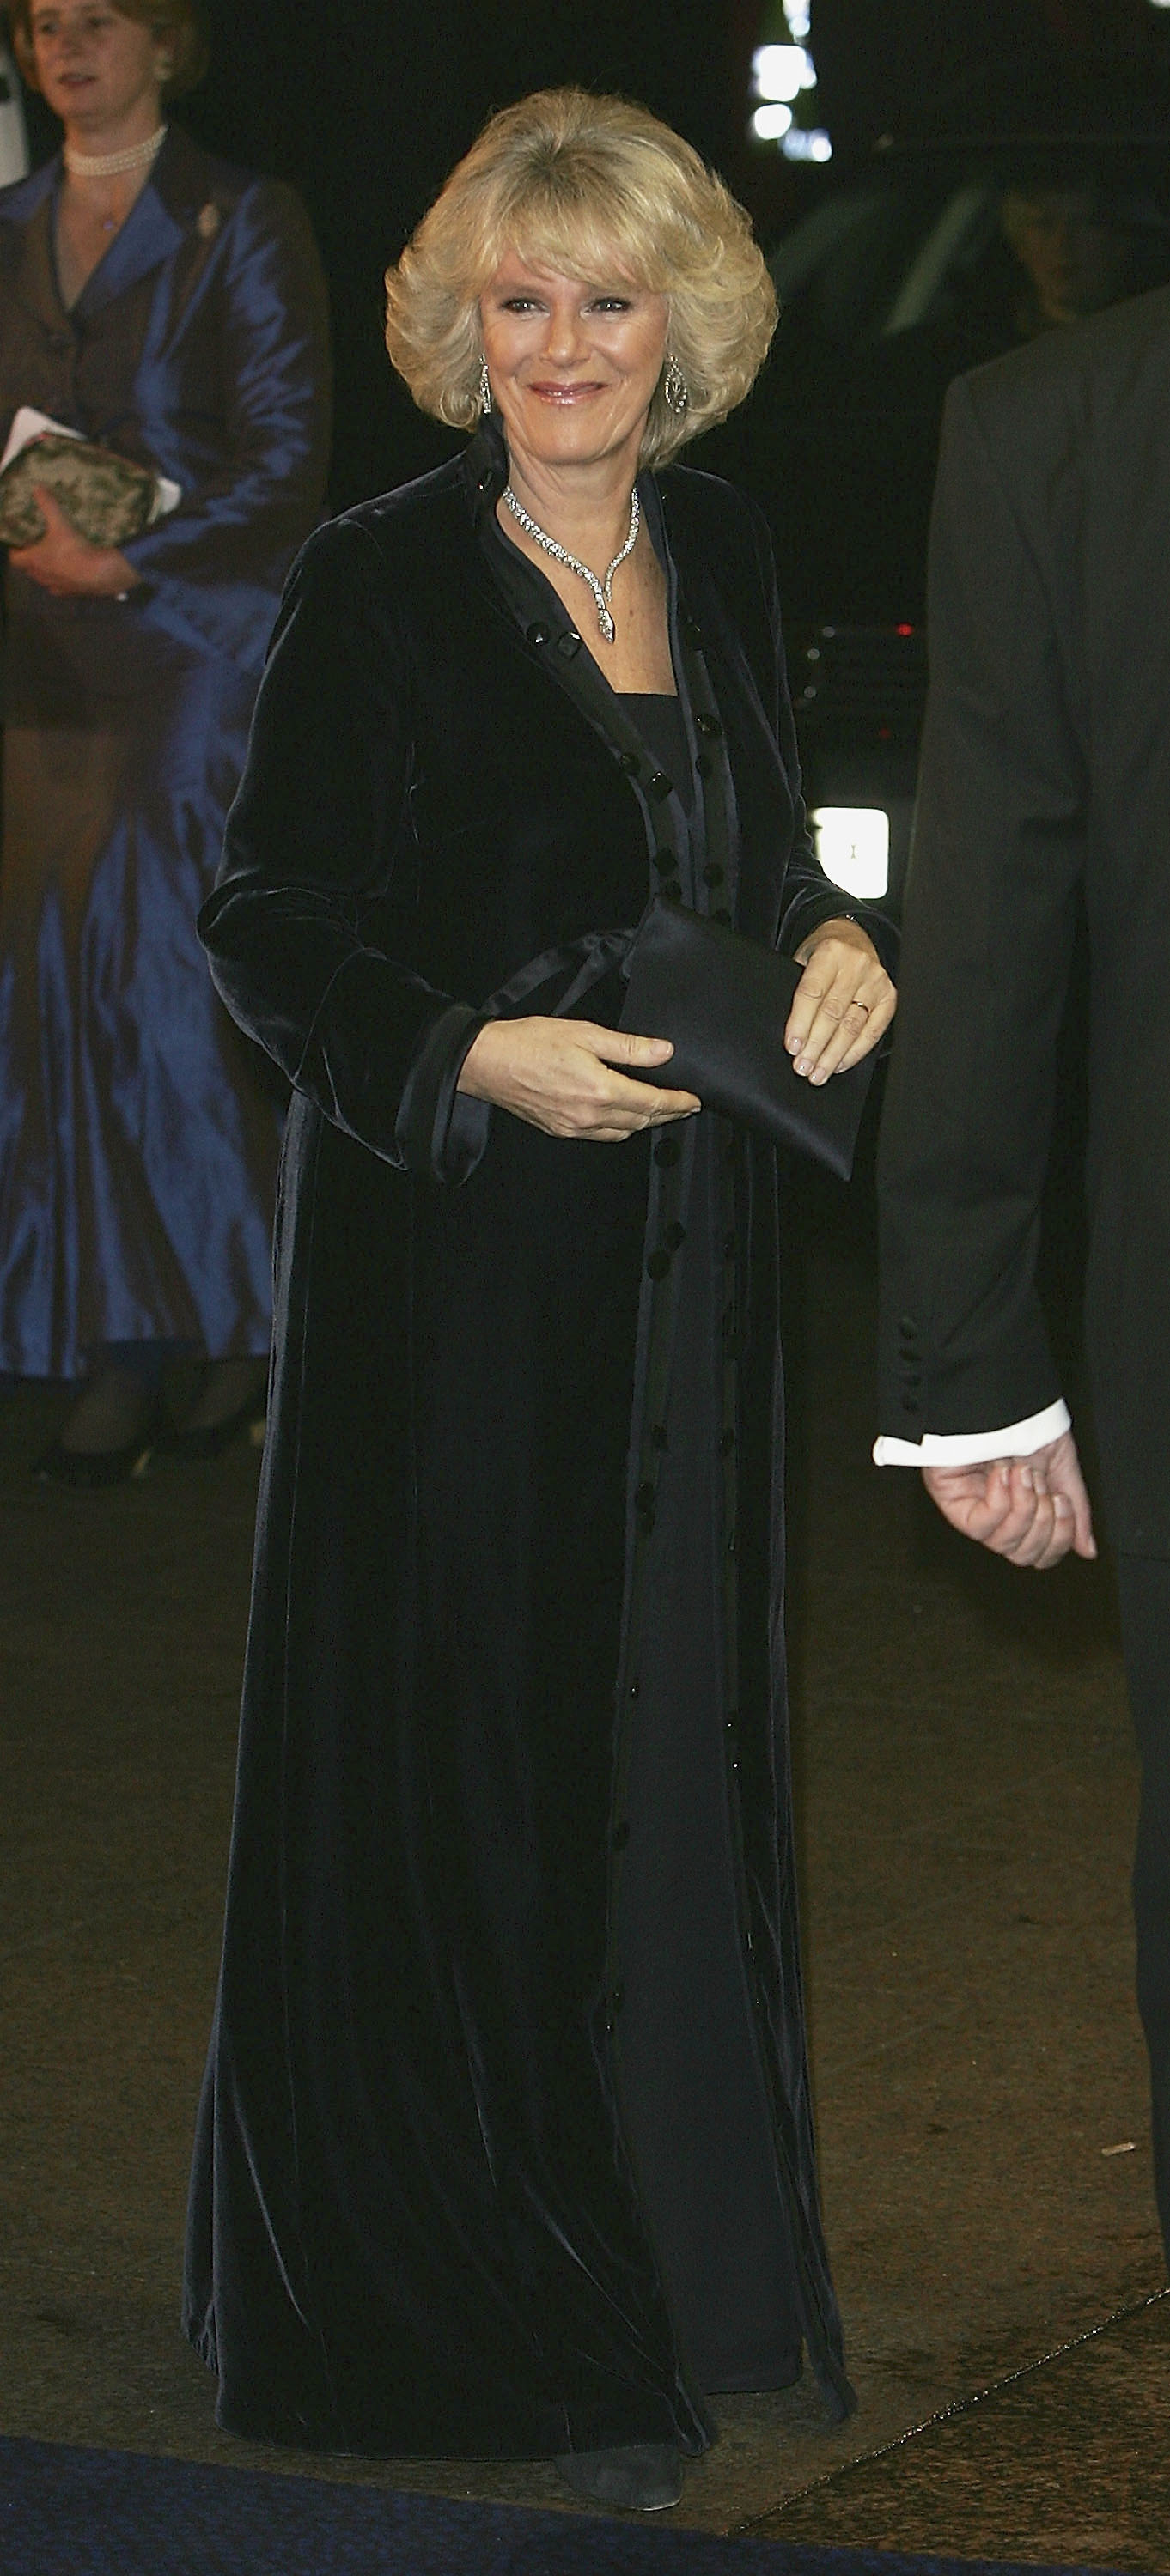 In photos: Queen Camilla's style evolution